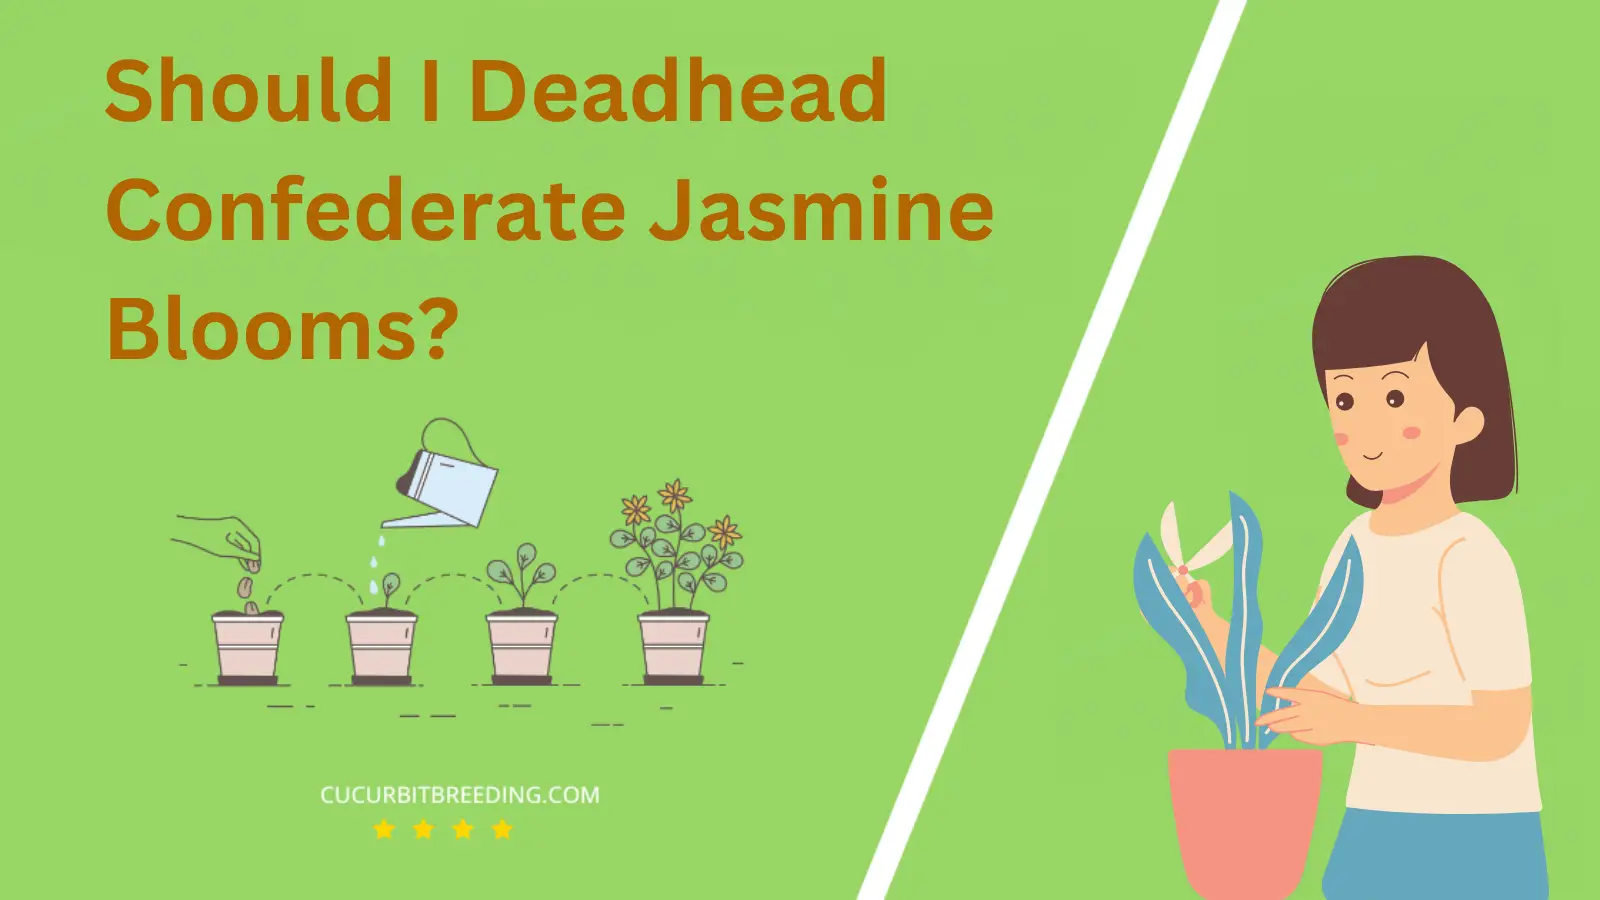 Should I Deadhead Confederate Jasmine Blooms?